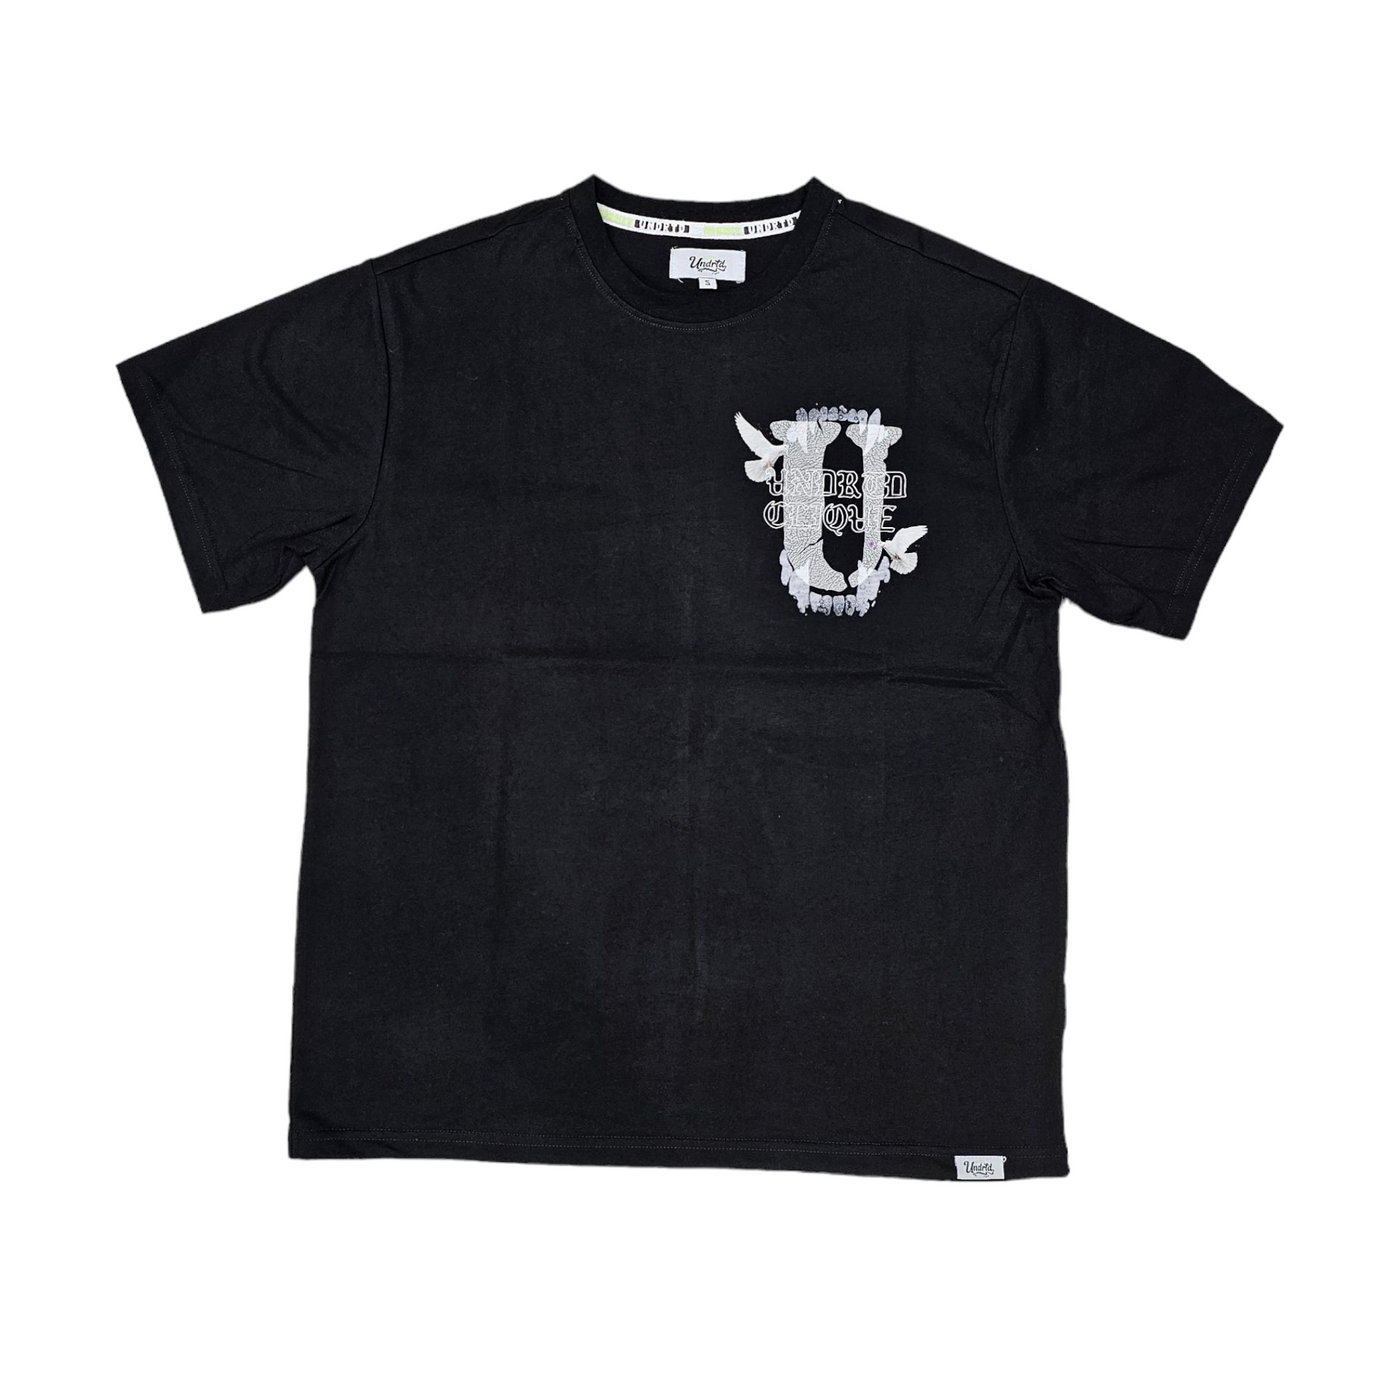 Highly Undrtd Clique Rolls T-Shirt Black US4103